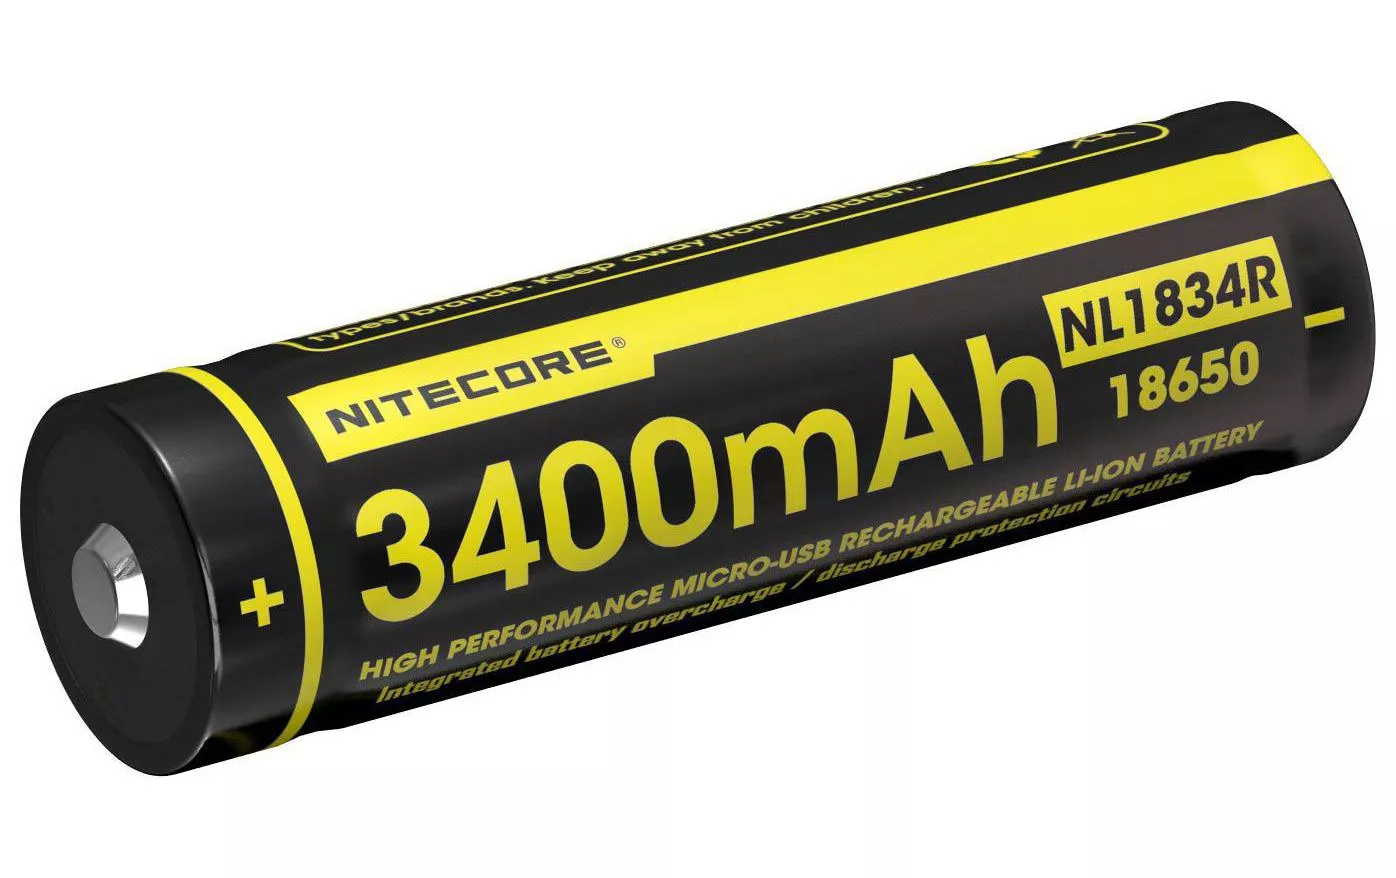 Batteria Nitecore NL1834R 18650 3400 mAh